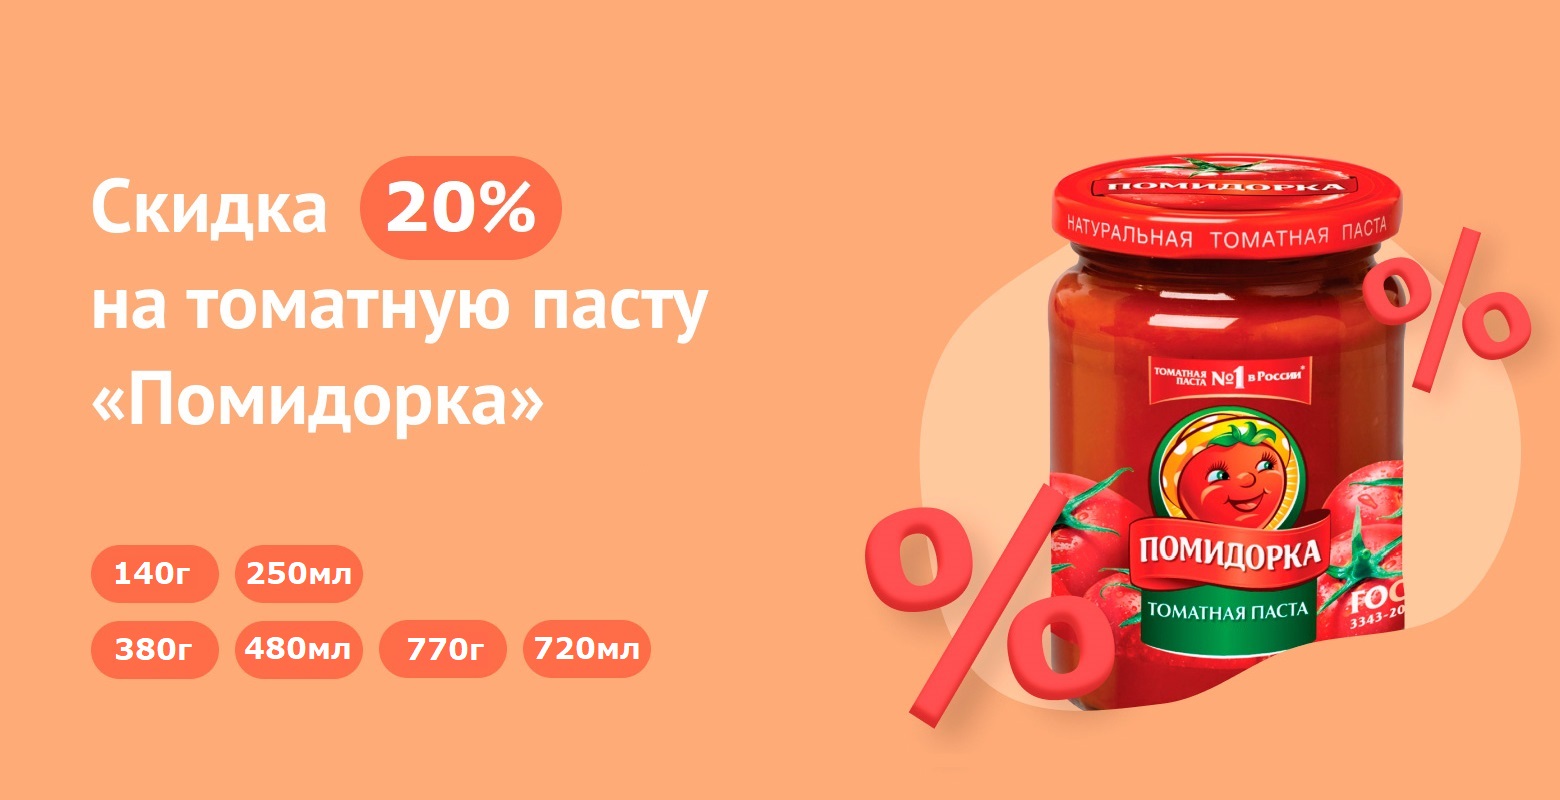 Скидка 20% на томатную пасту «Помидорка»